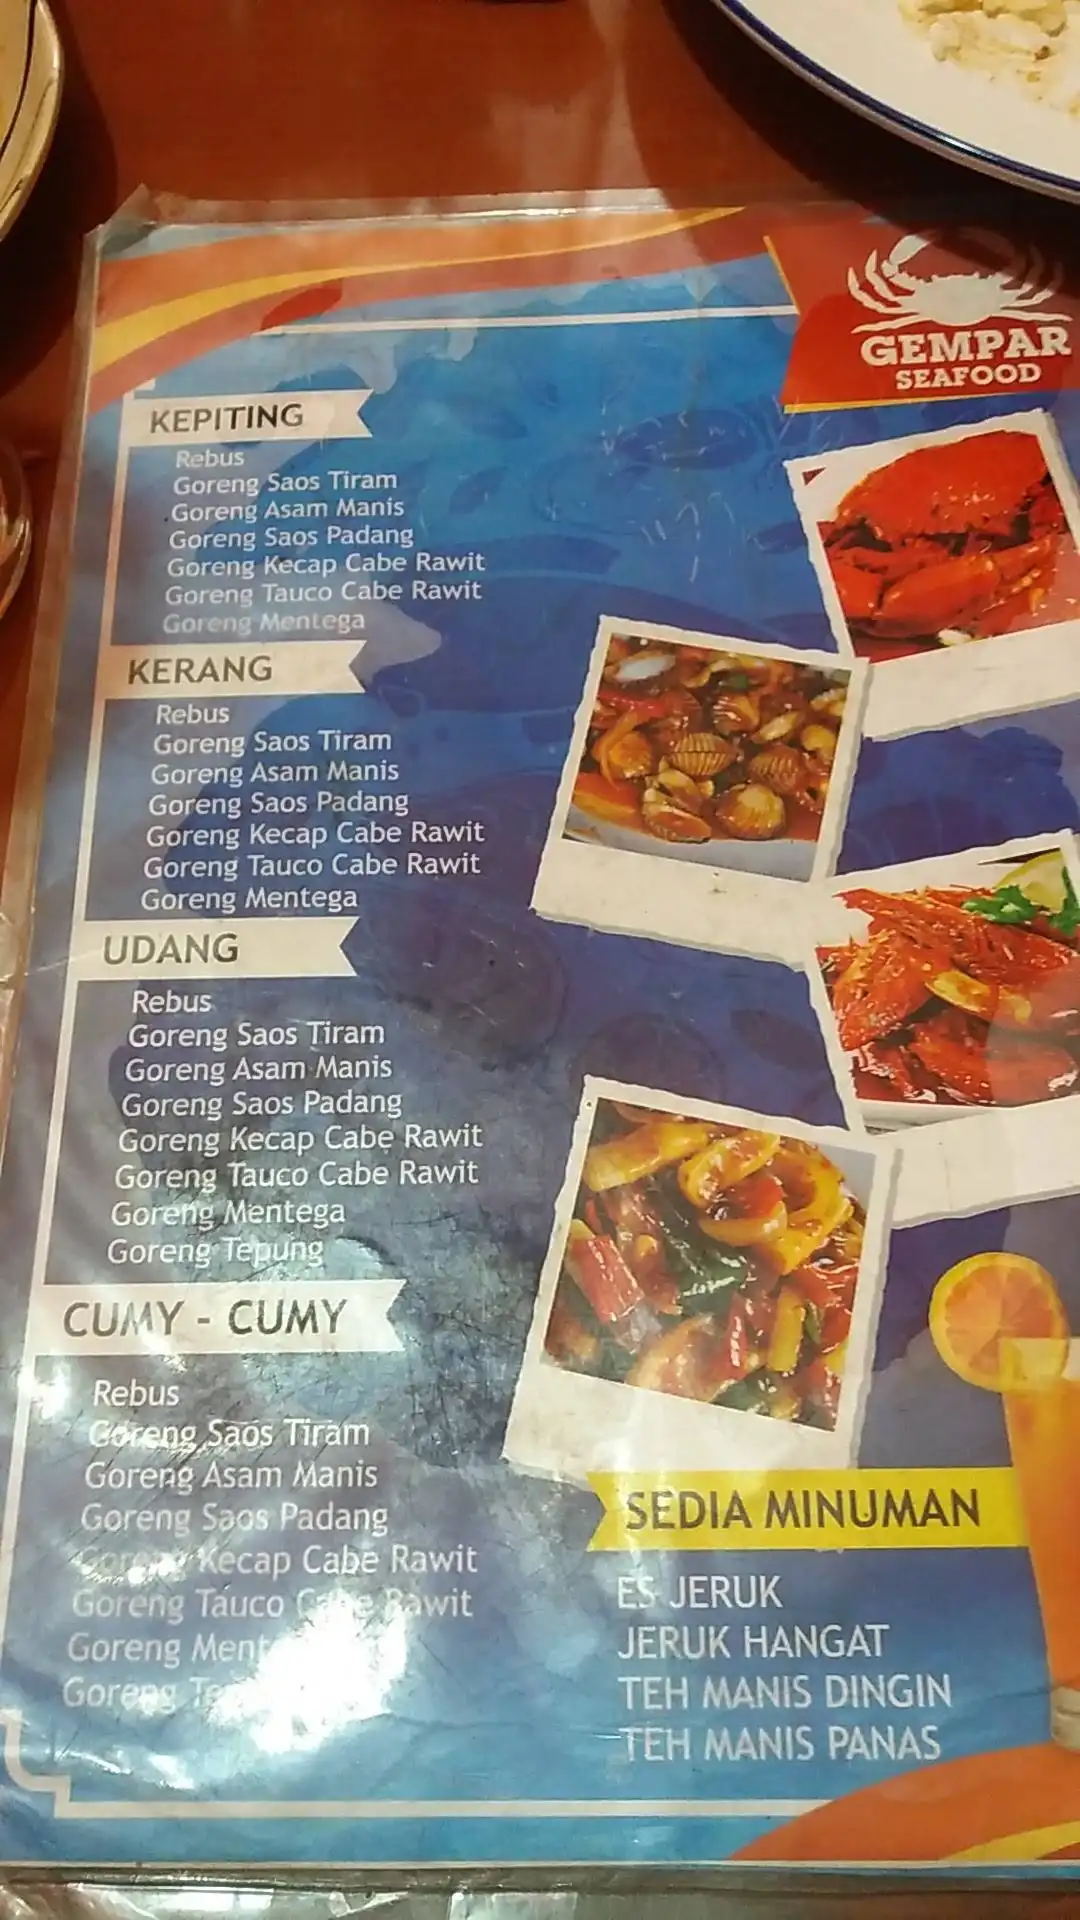 Gempar Sea Food